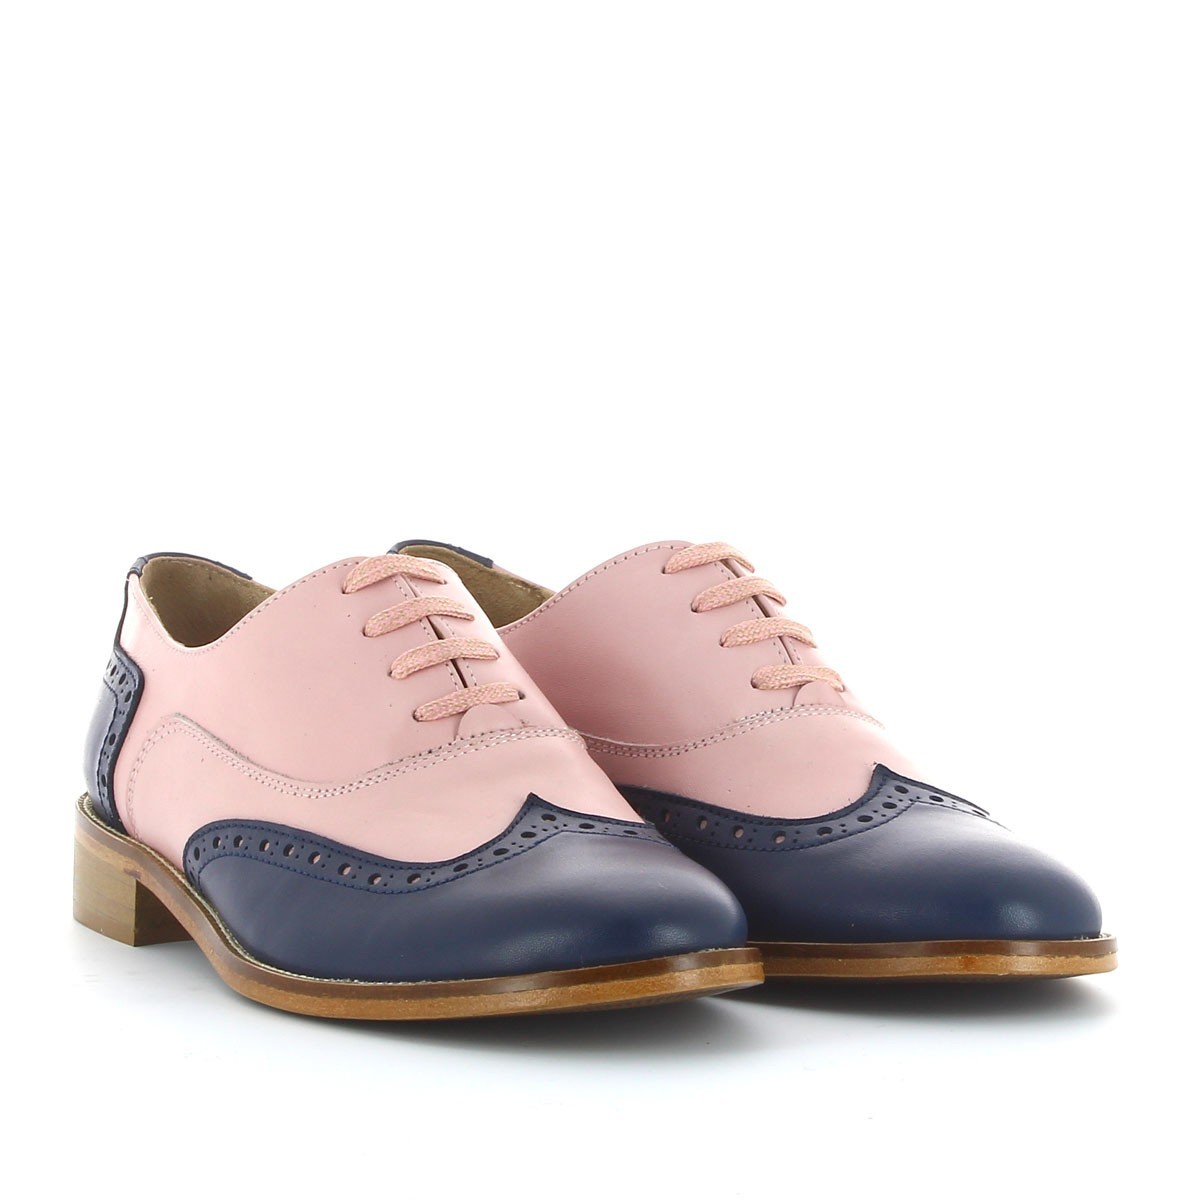 https://brunobernardo.pt/10756-large_default/chaussures-femme-rose-et-bleu.jpg